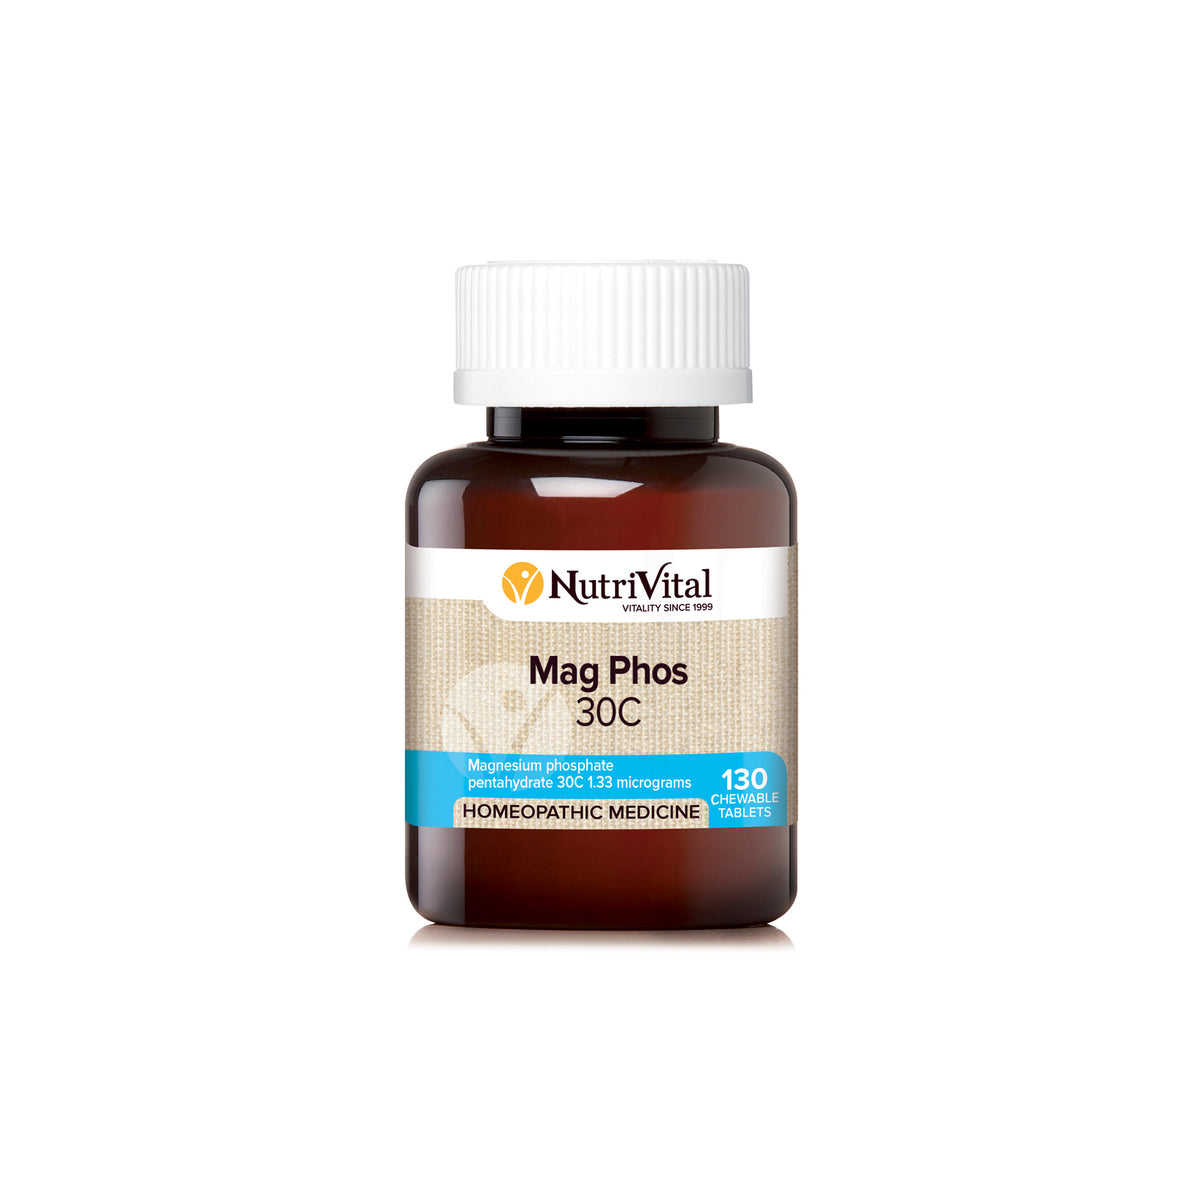 NutriVital Homeopathic Mag Phos 30C